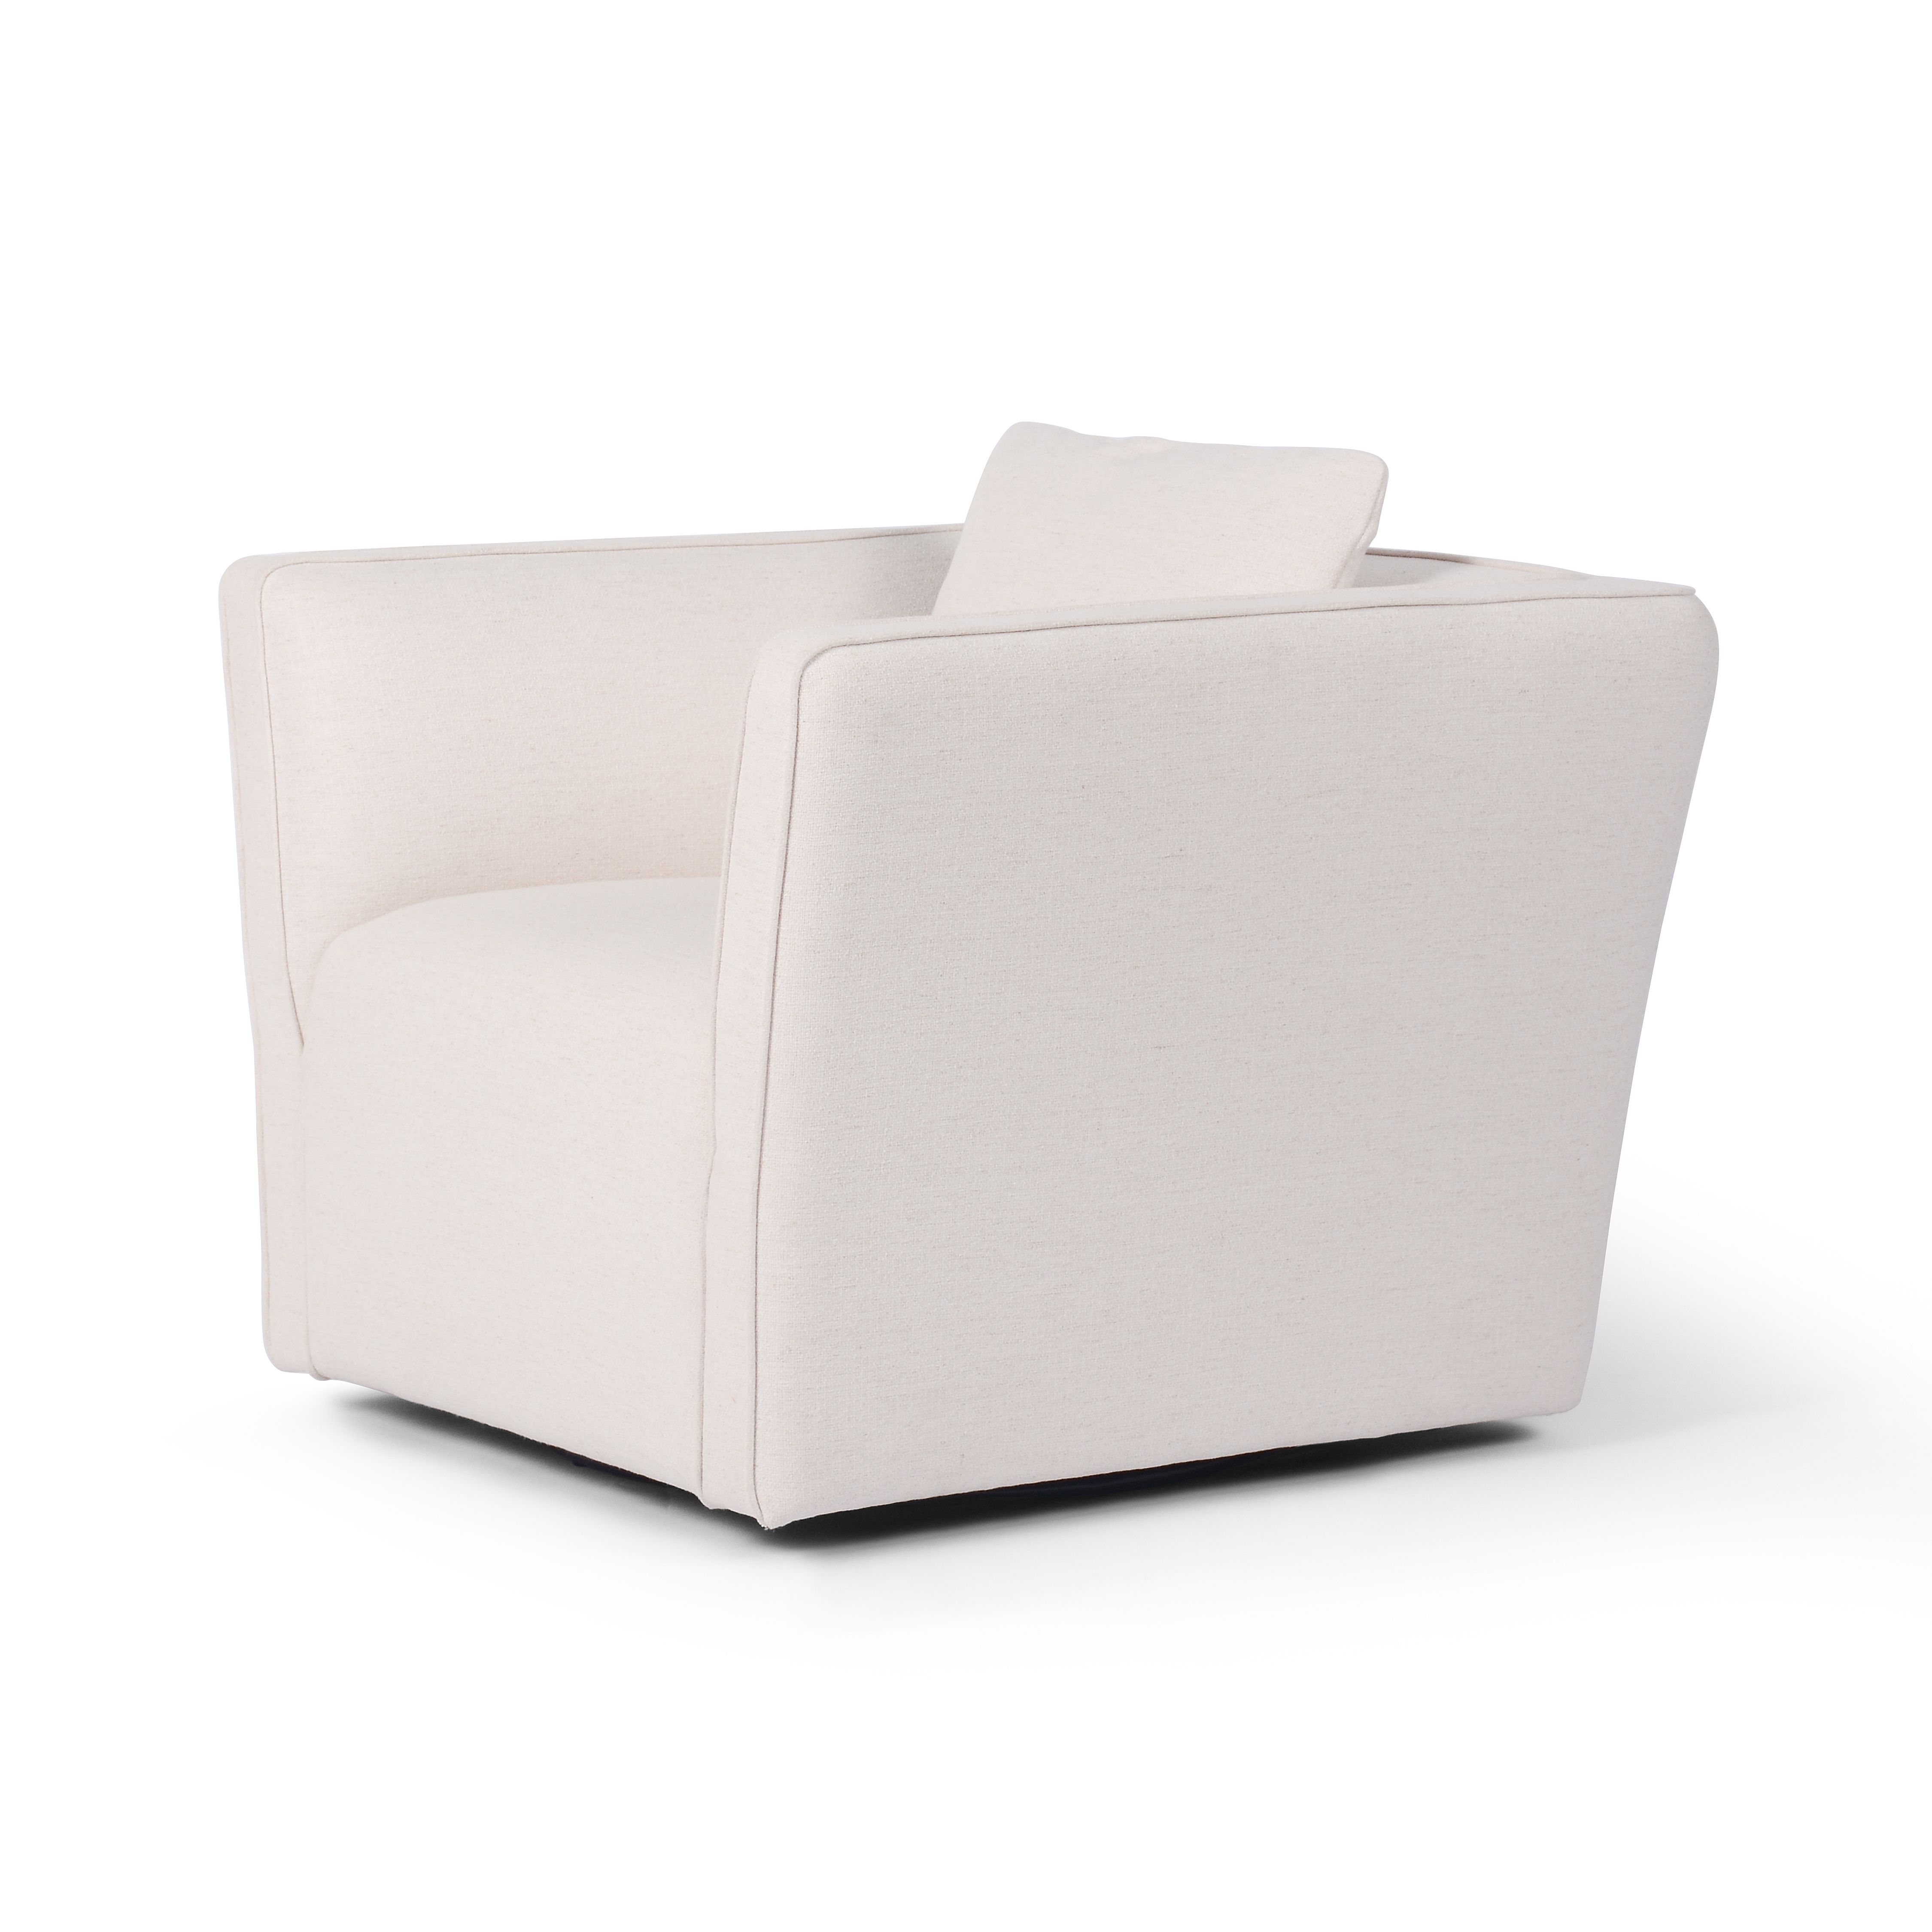 Cantrell Swivel Chair-Badon Flax - Image 2